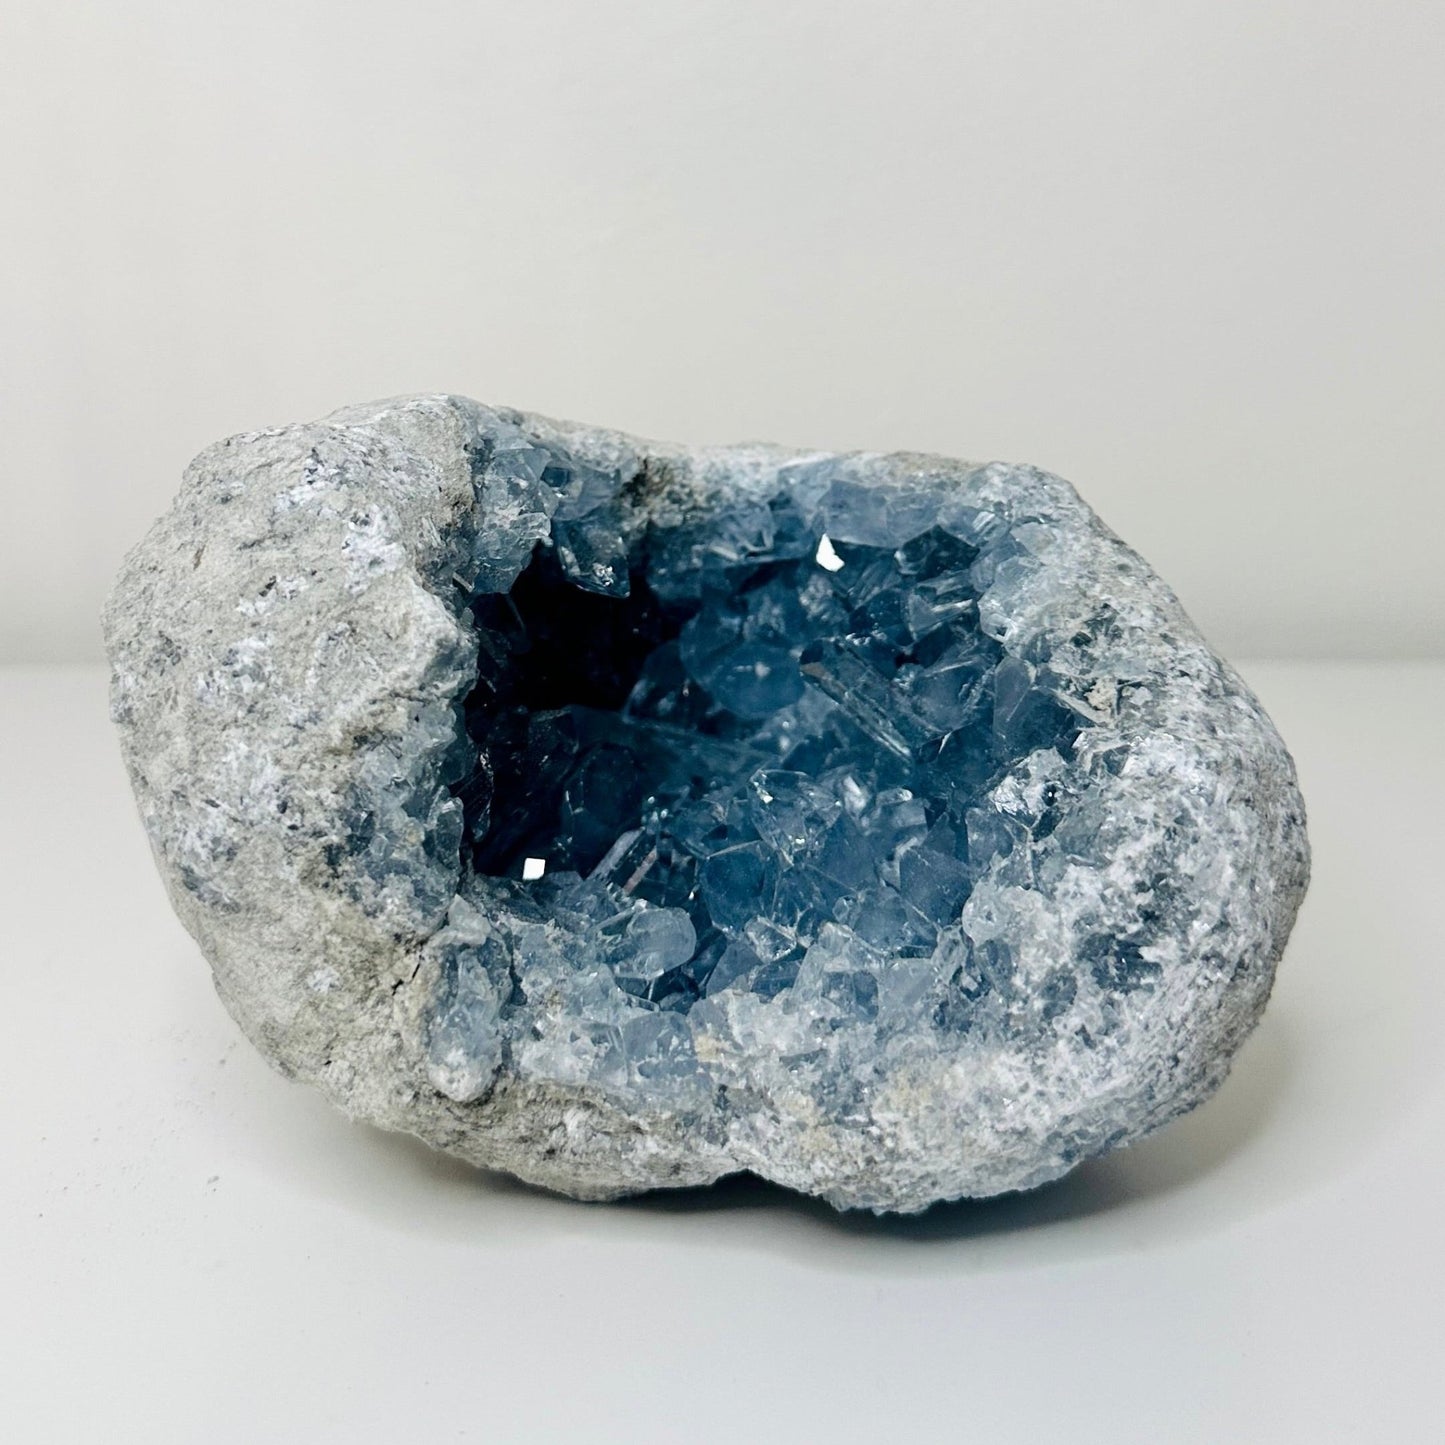 Raw Celestite Cluster - Deep Blue Crystals - Natural Specimen From Madagascar ~7lbs/3.2kg - KREATEUR MIAMI